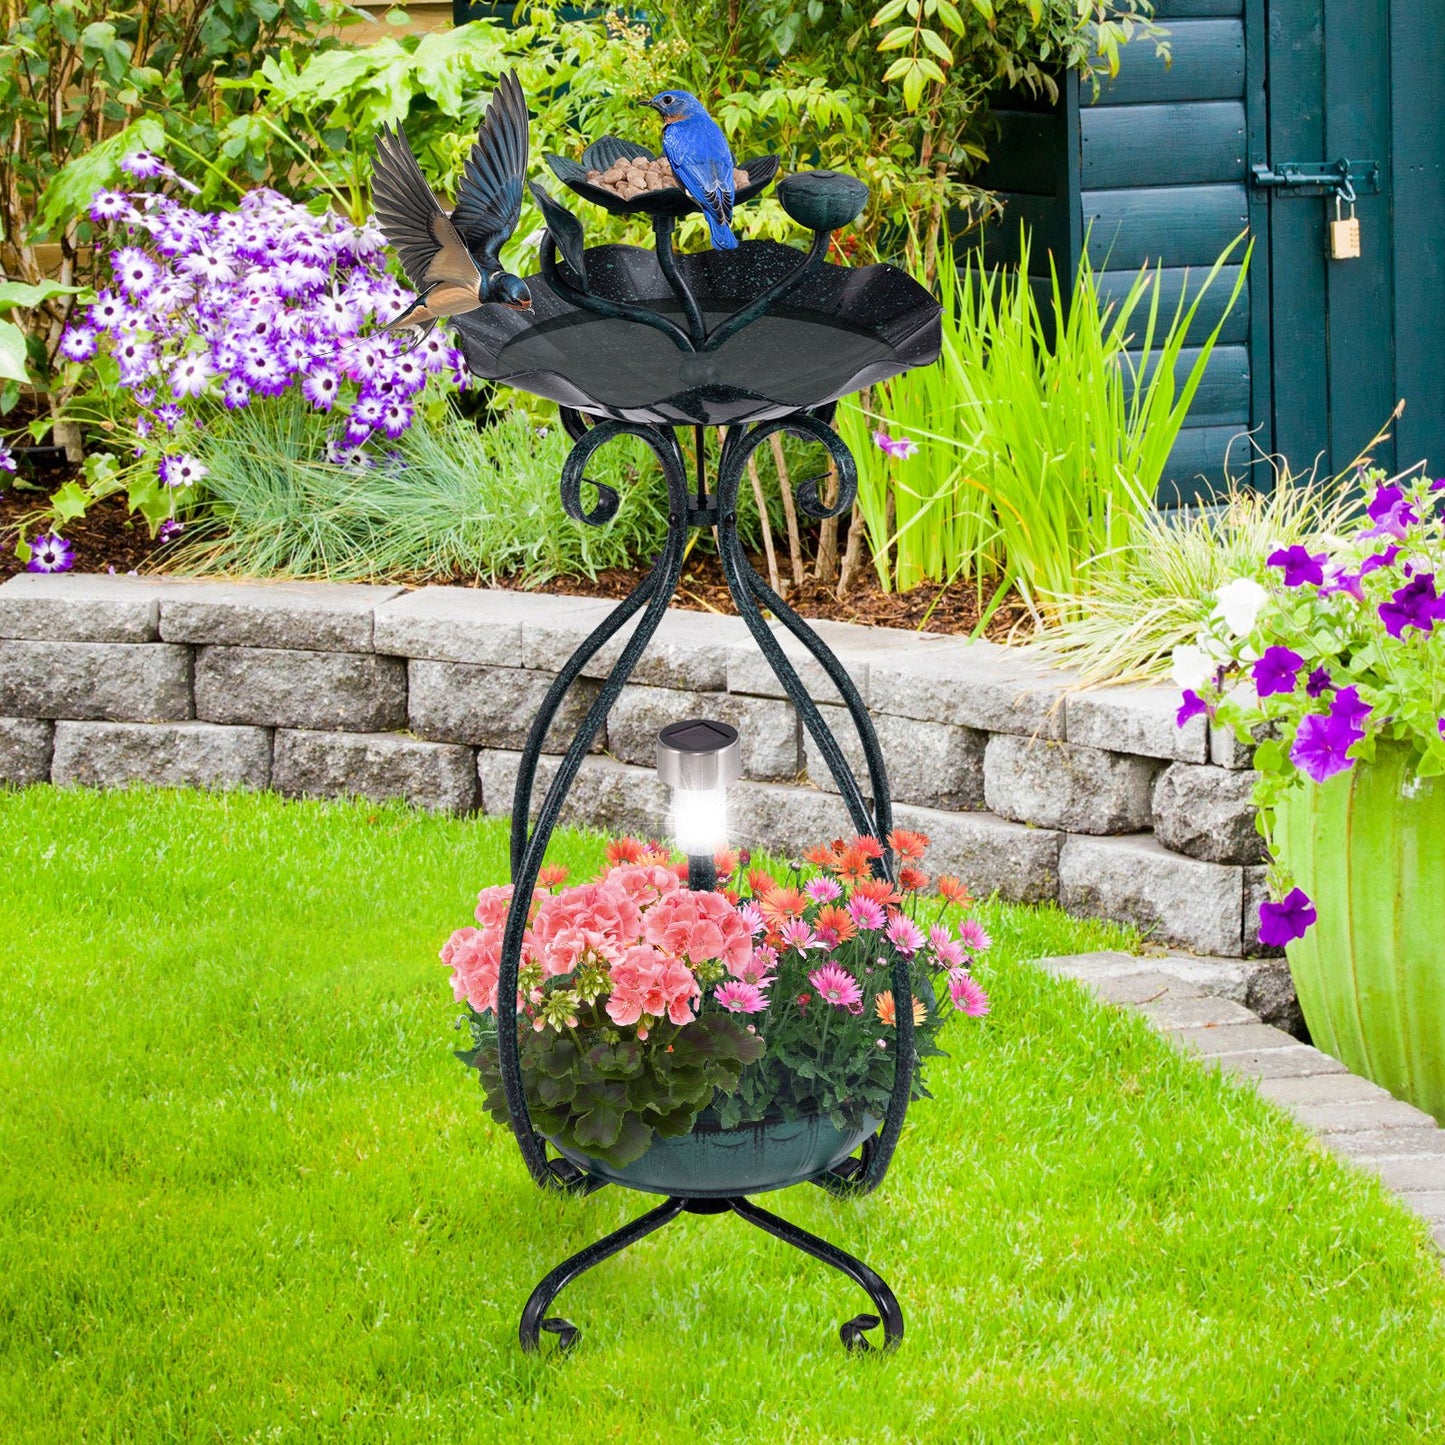 Solar Outdoor Bird Bath Feeder Combo with Flower Planter Pedestal and Solar Lights, Bronze